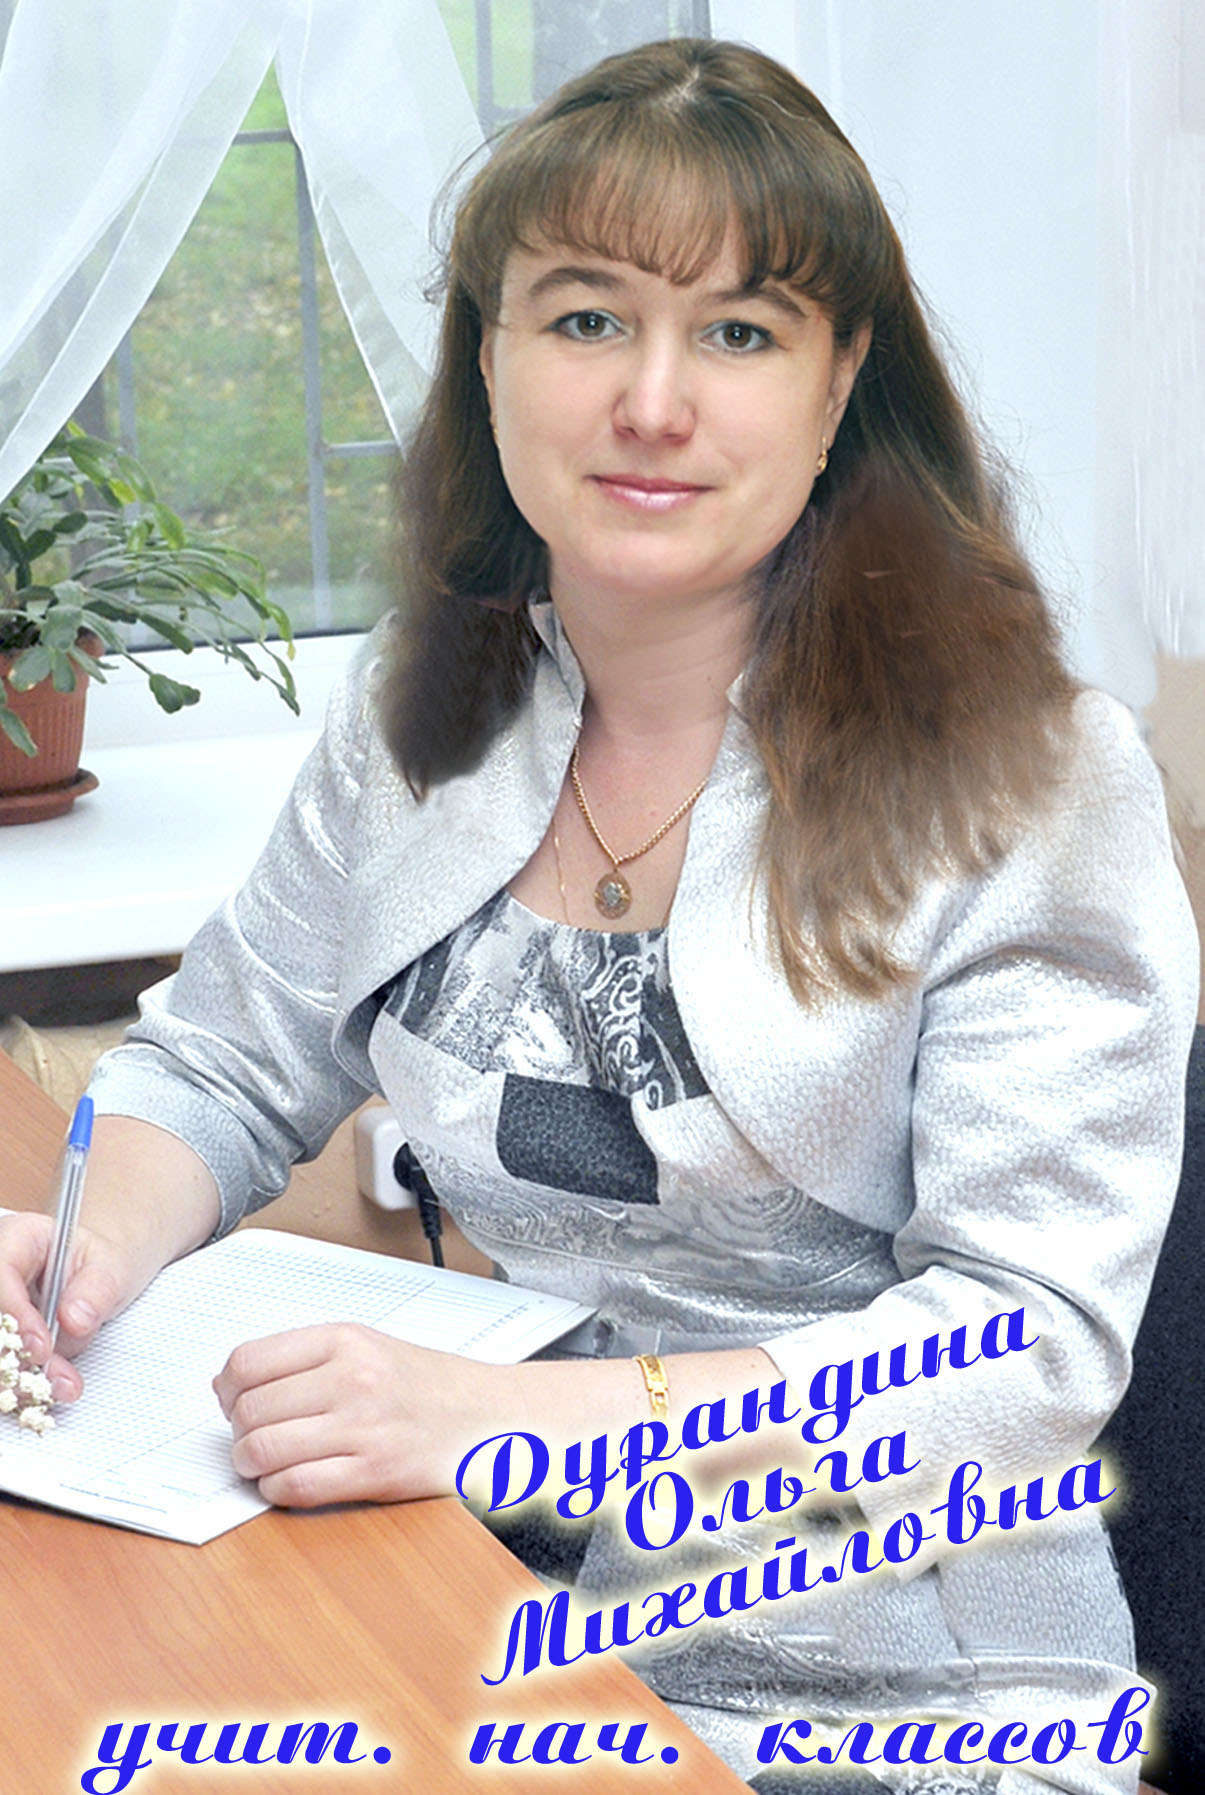 Дурандина Ольга Михайловна.